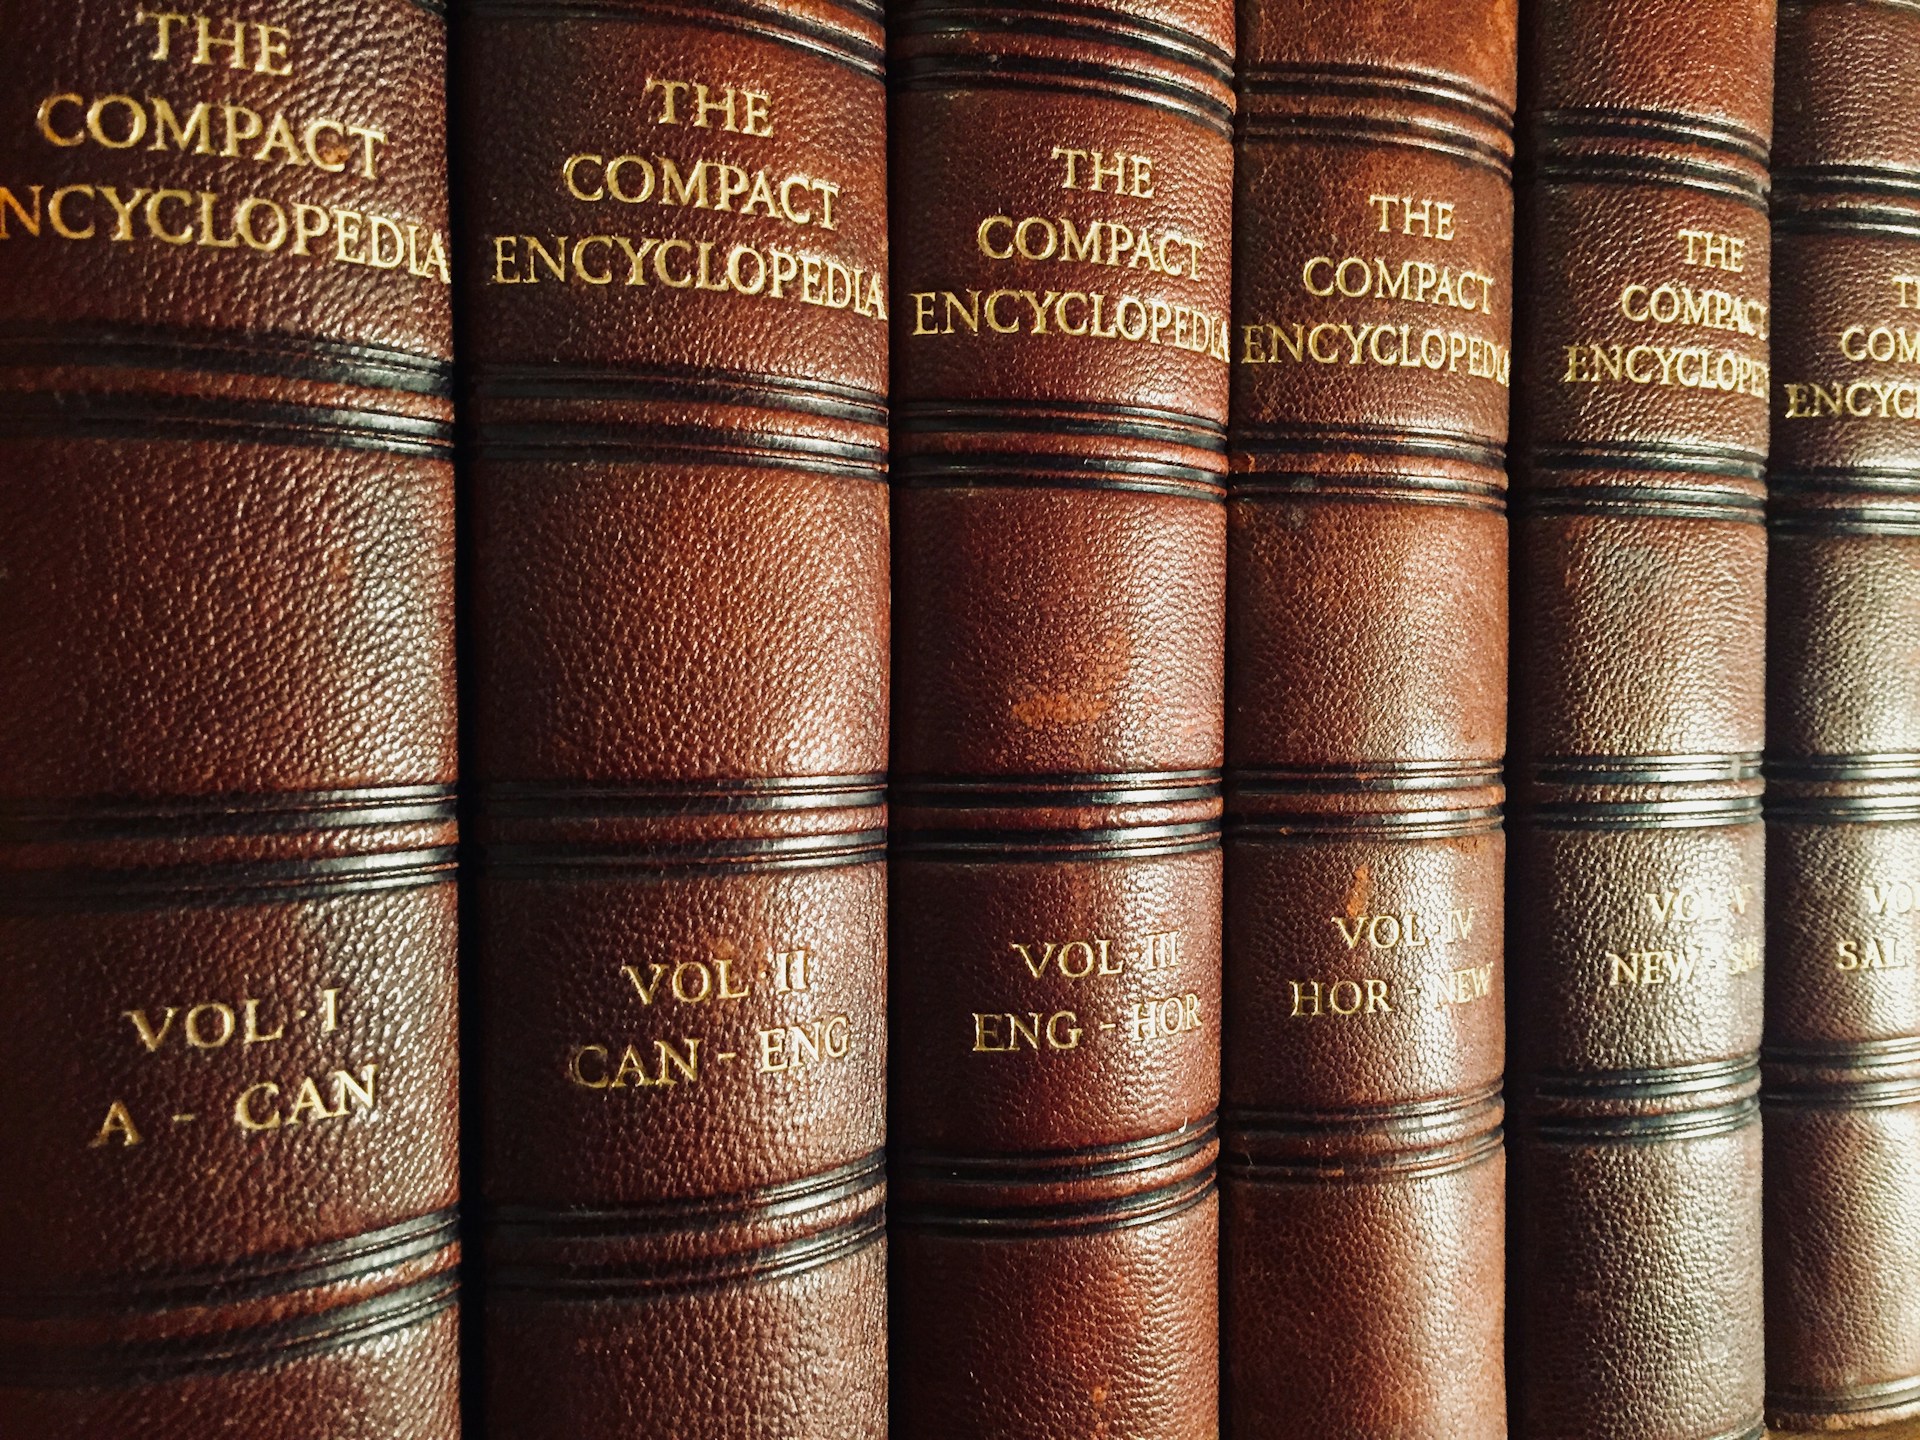 A shelf of encyclopedia volumes.